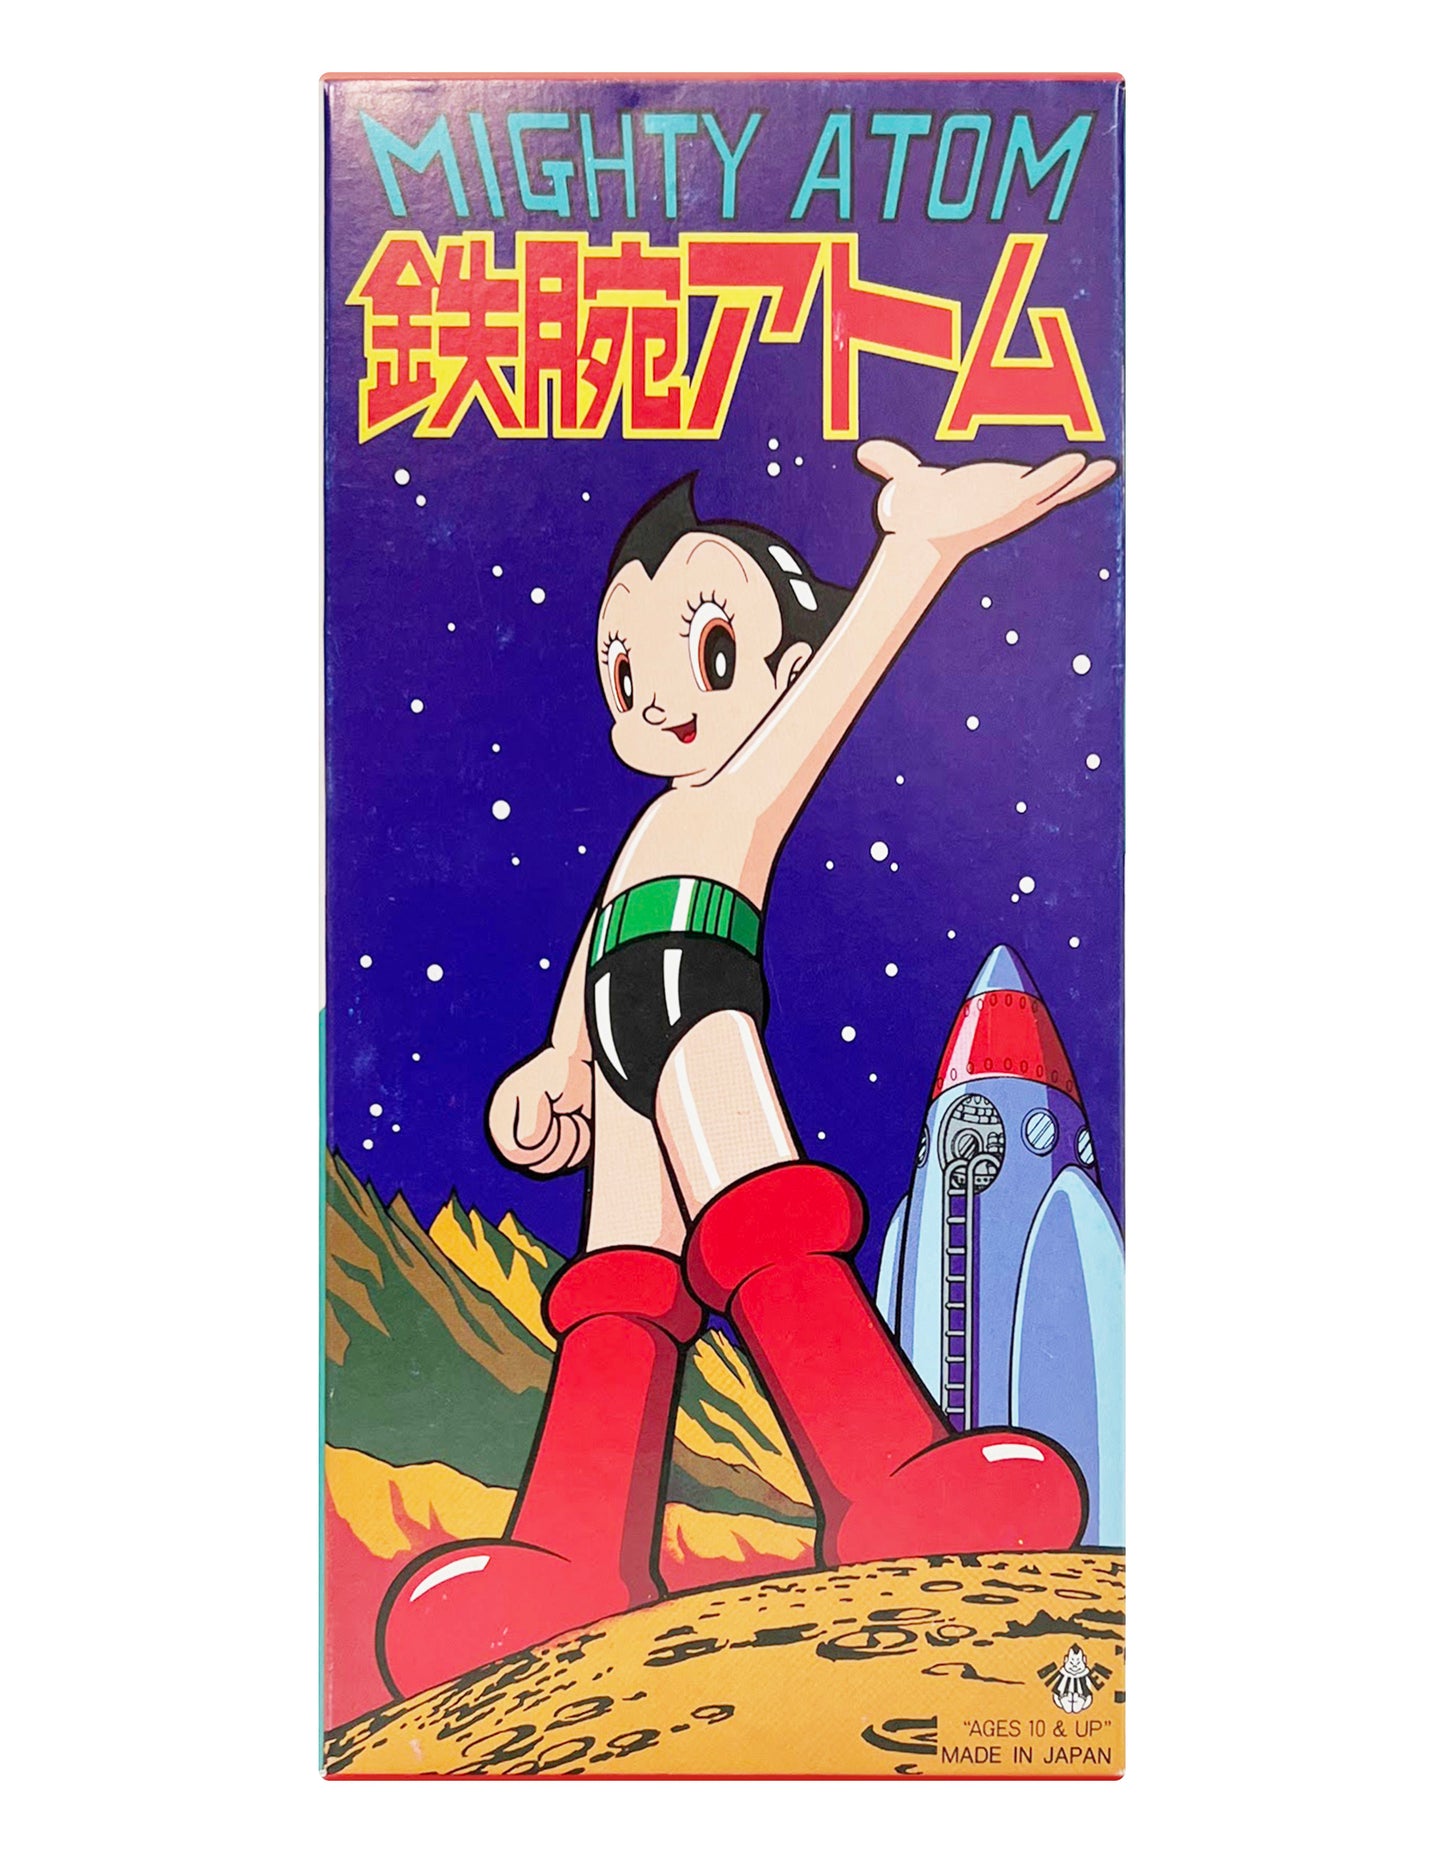 Billiken Shokai: Tezuka Productions - Astro Boy Mighty Atom Tin Toy Windup Made in Japan